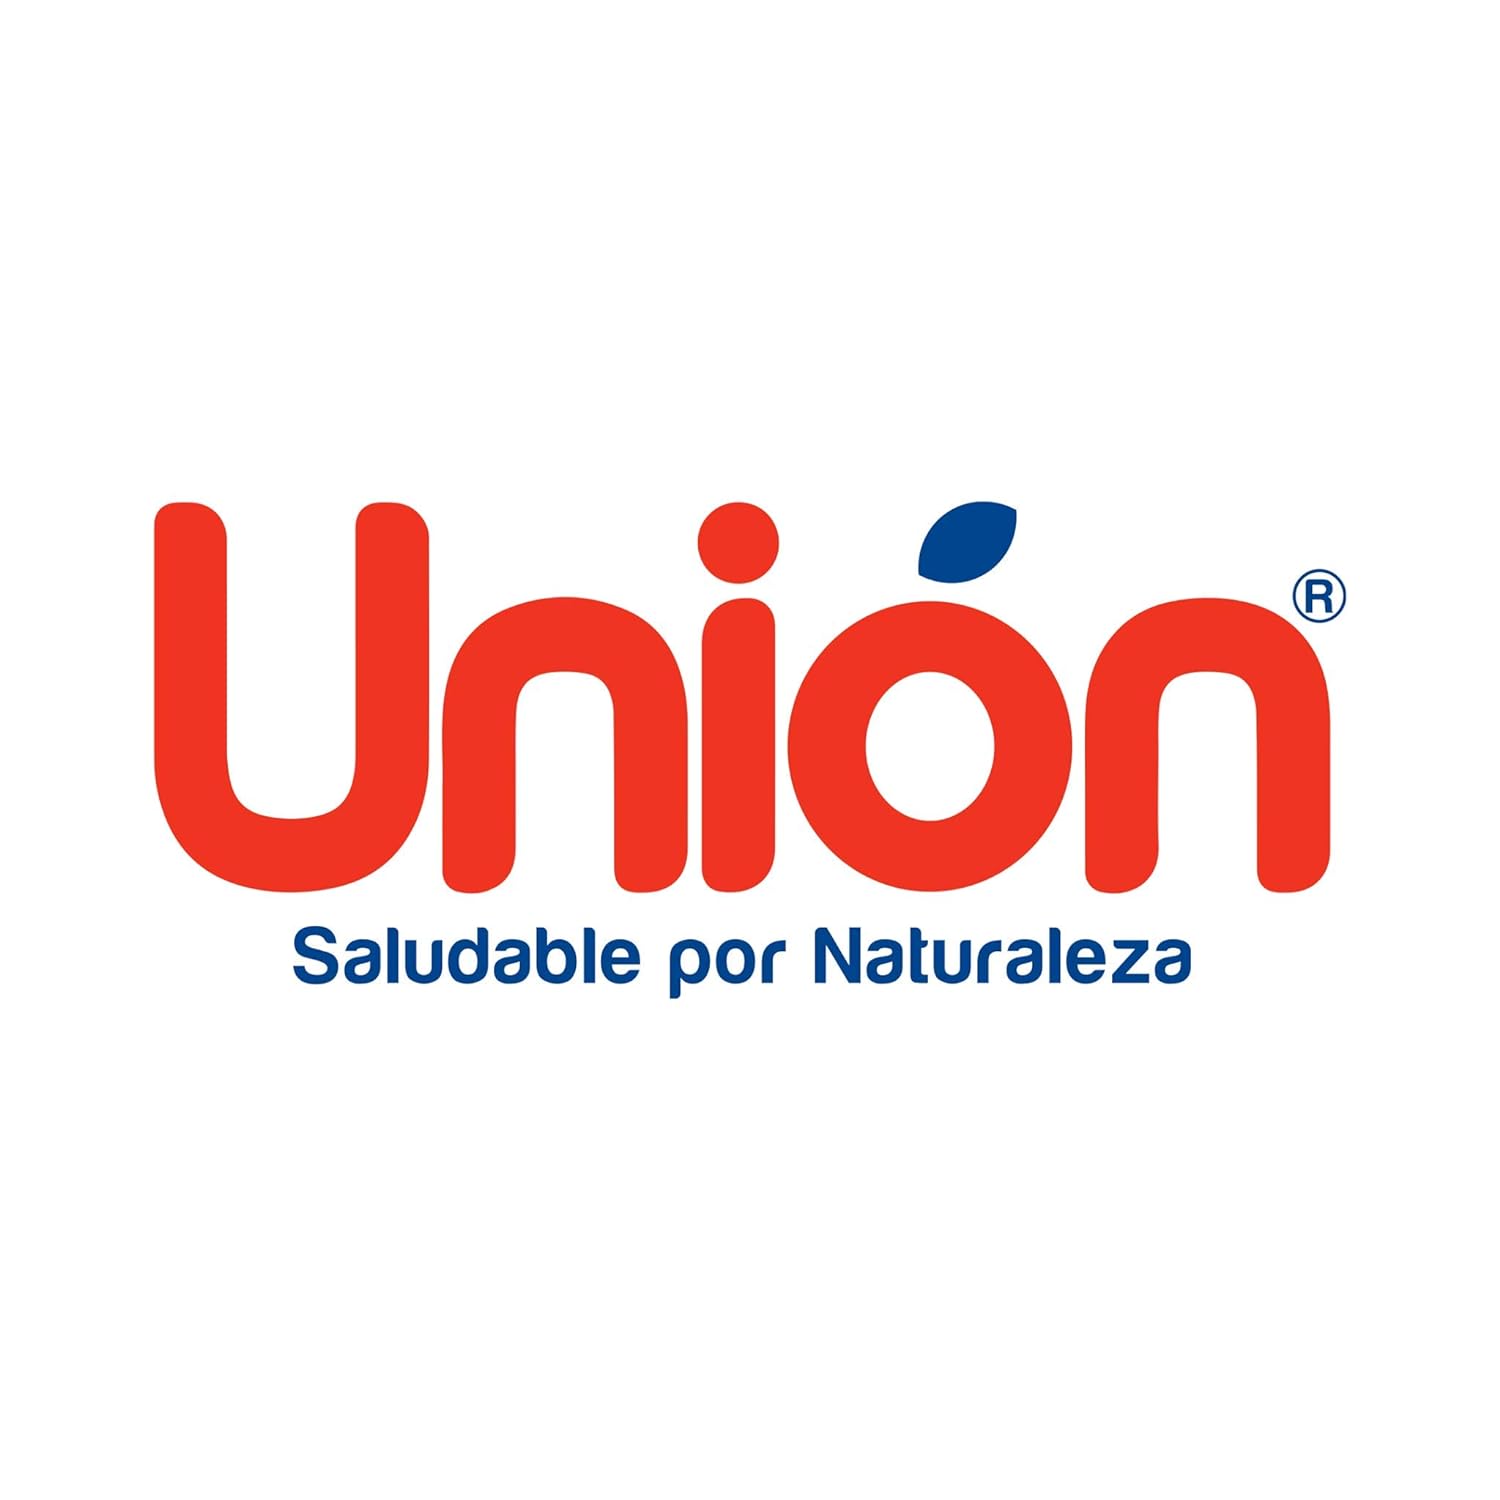 Paneton Union | Healthy Gourmet Peruvian Panettone | Christmas Fruit Cake with Super Food Curcumin, Raisins & Candied Fruits | 2 Lbs (900 g)